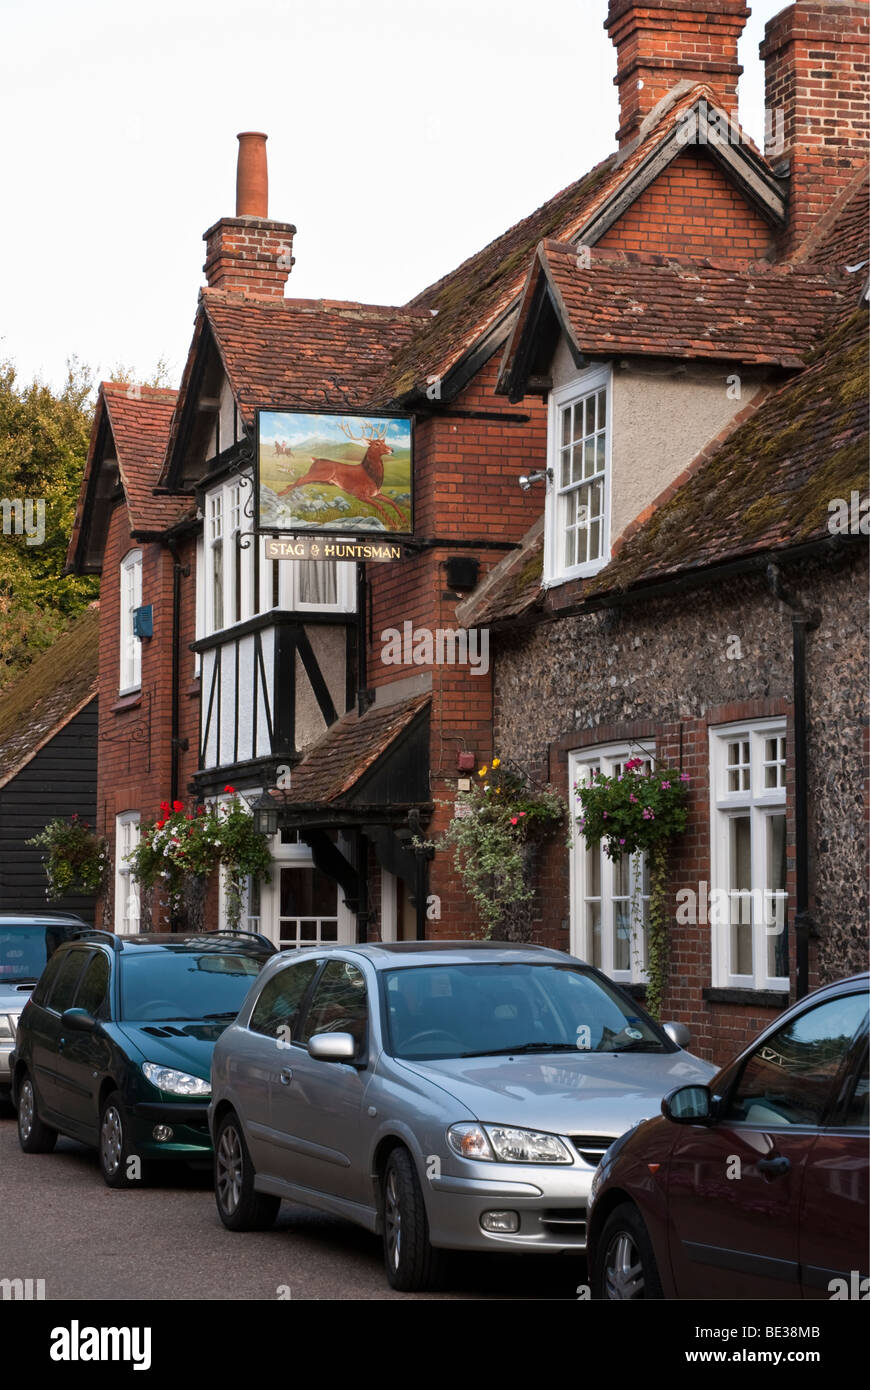 The Stag & Huntsman pub at Hambleden, Buckinghamshire, England, UK. Stock Photo